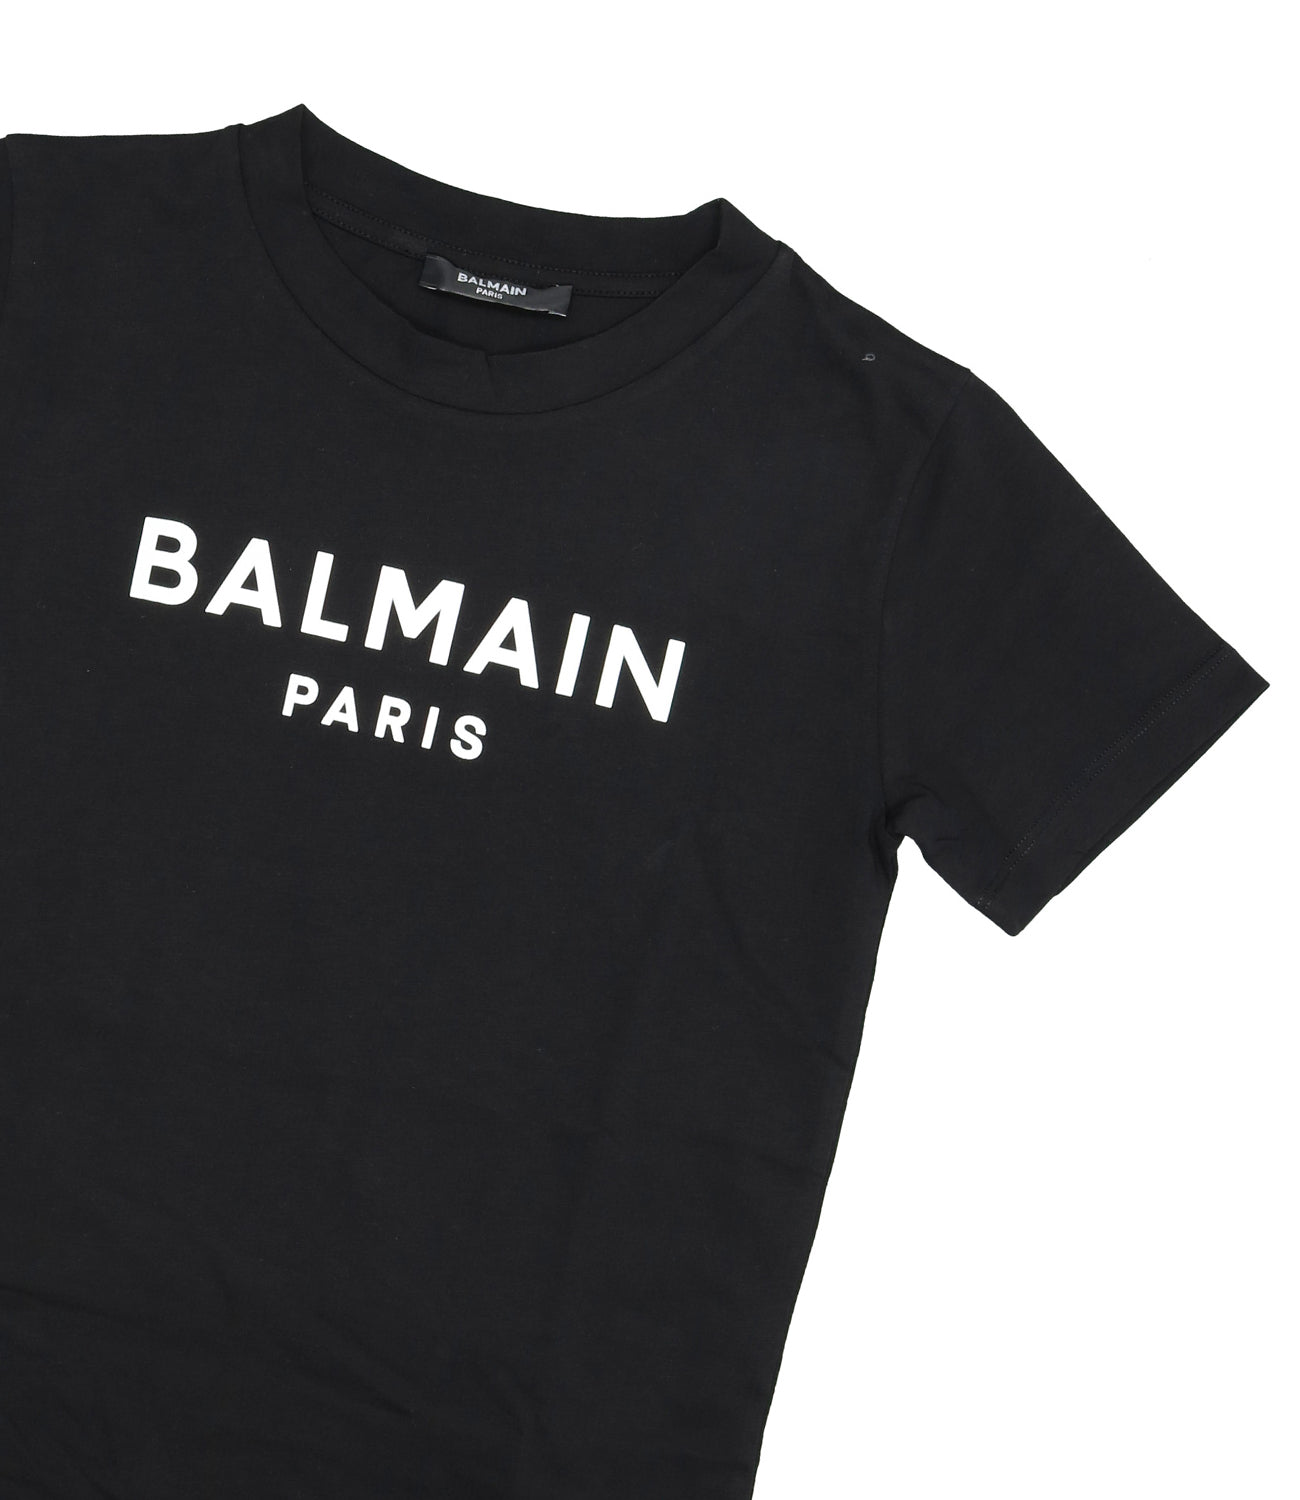 Balmain | Black and White T-Shirt